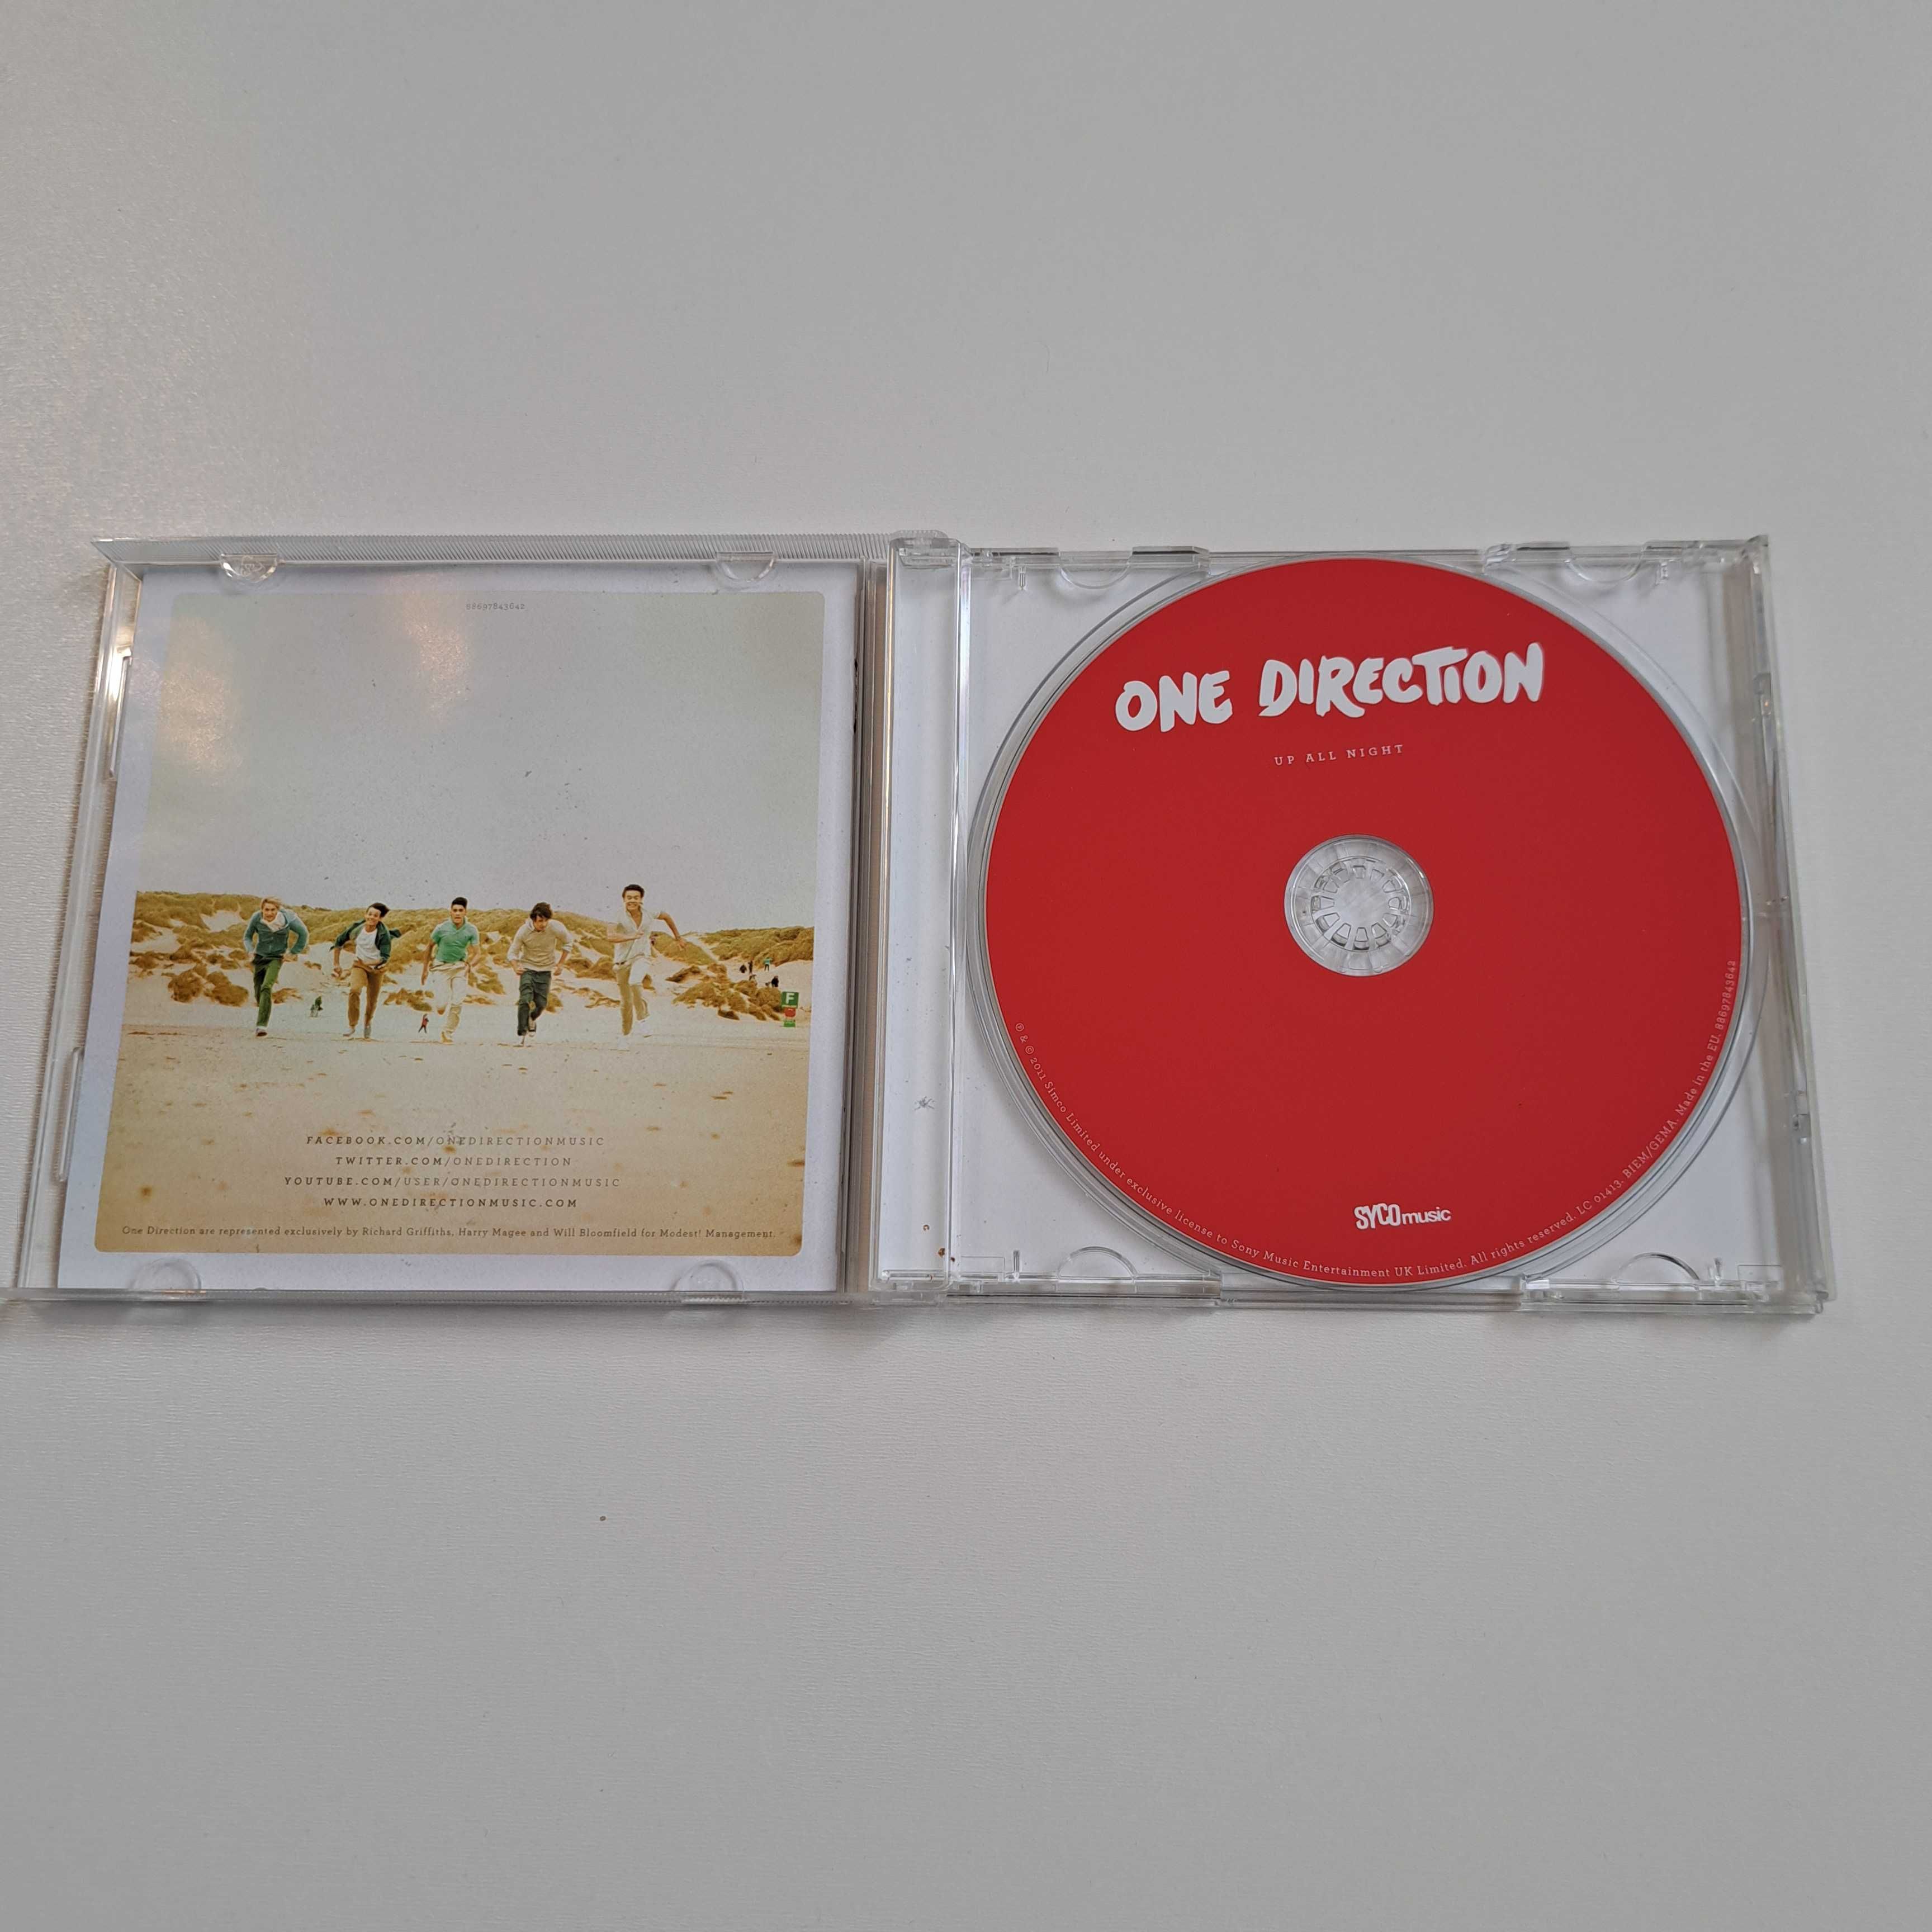 Płyta CD  One Direction - Up all night  nr611